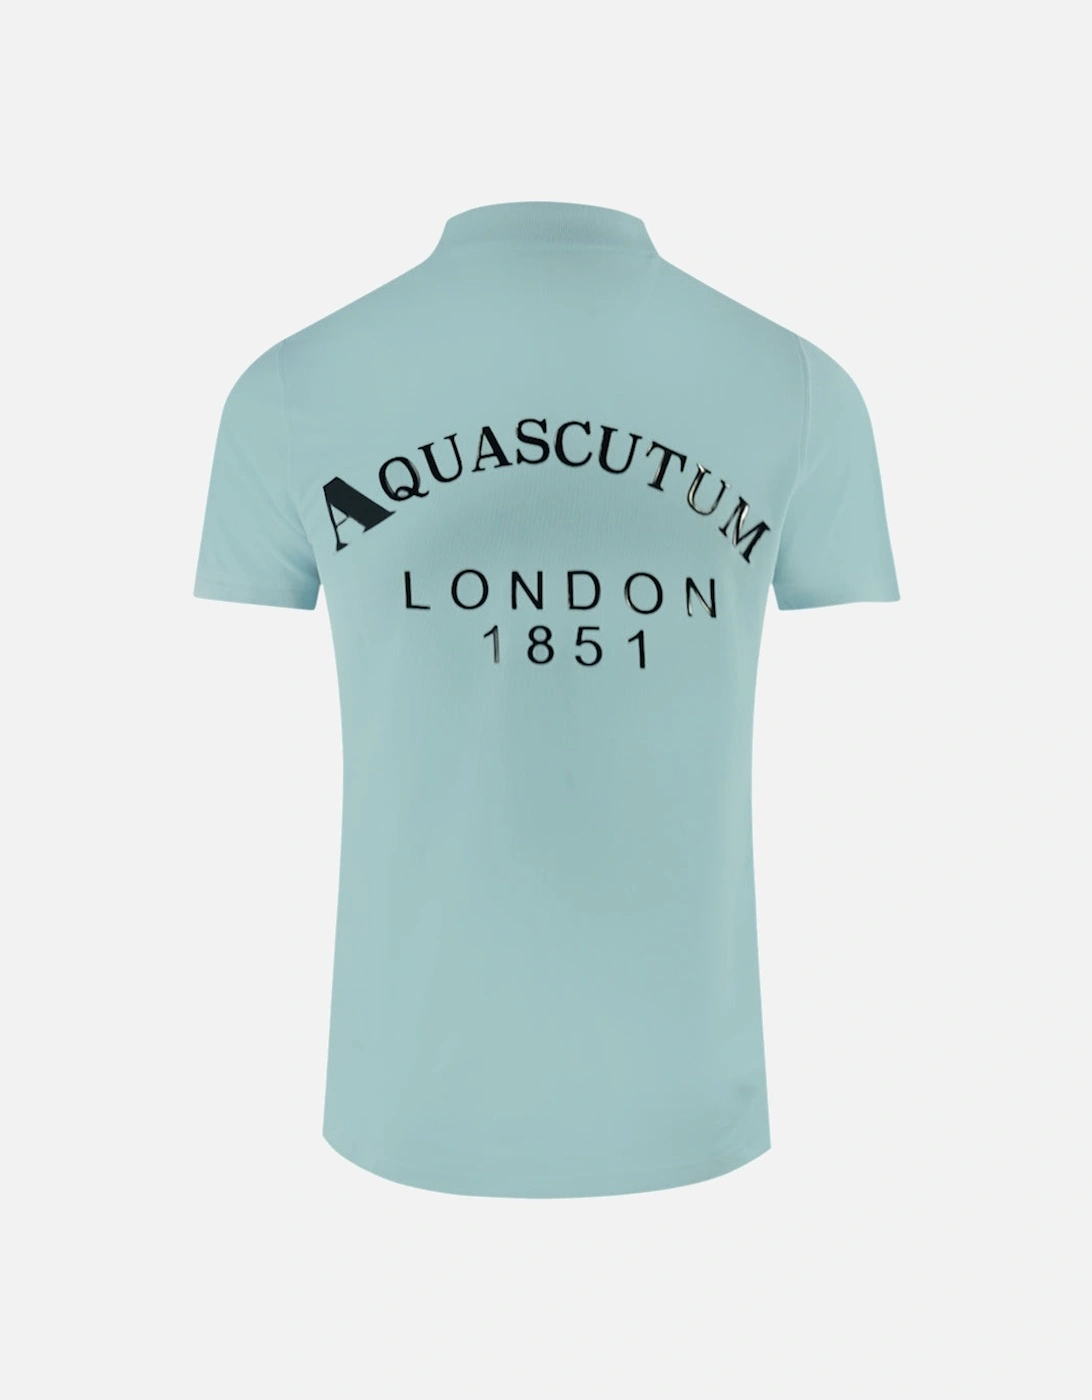 London 1851 Light Blue Polo Shirt